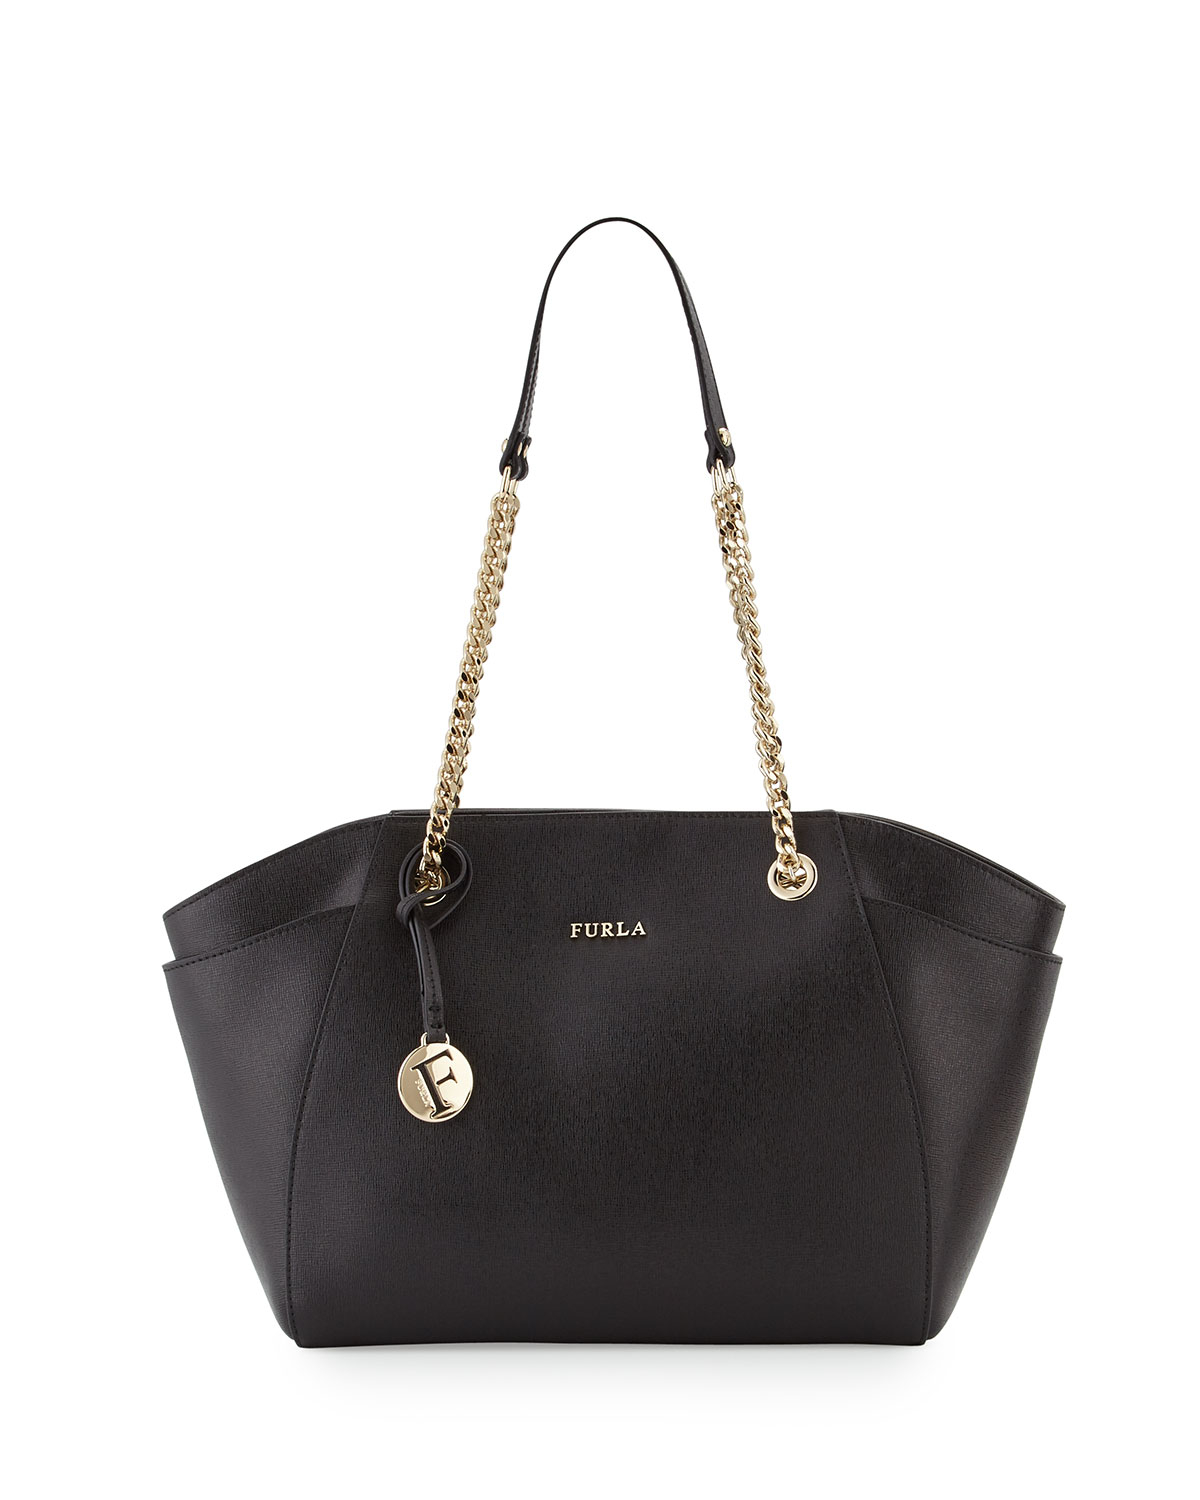 Furla Julia Medium Leather Tote Bag in Black | Lyst